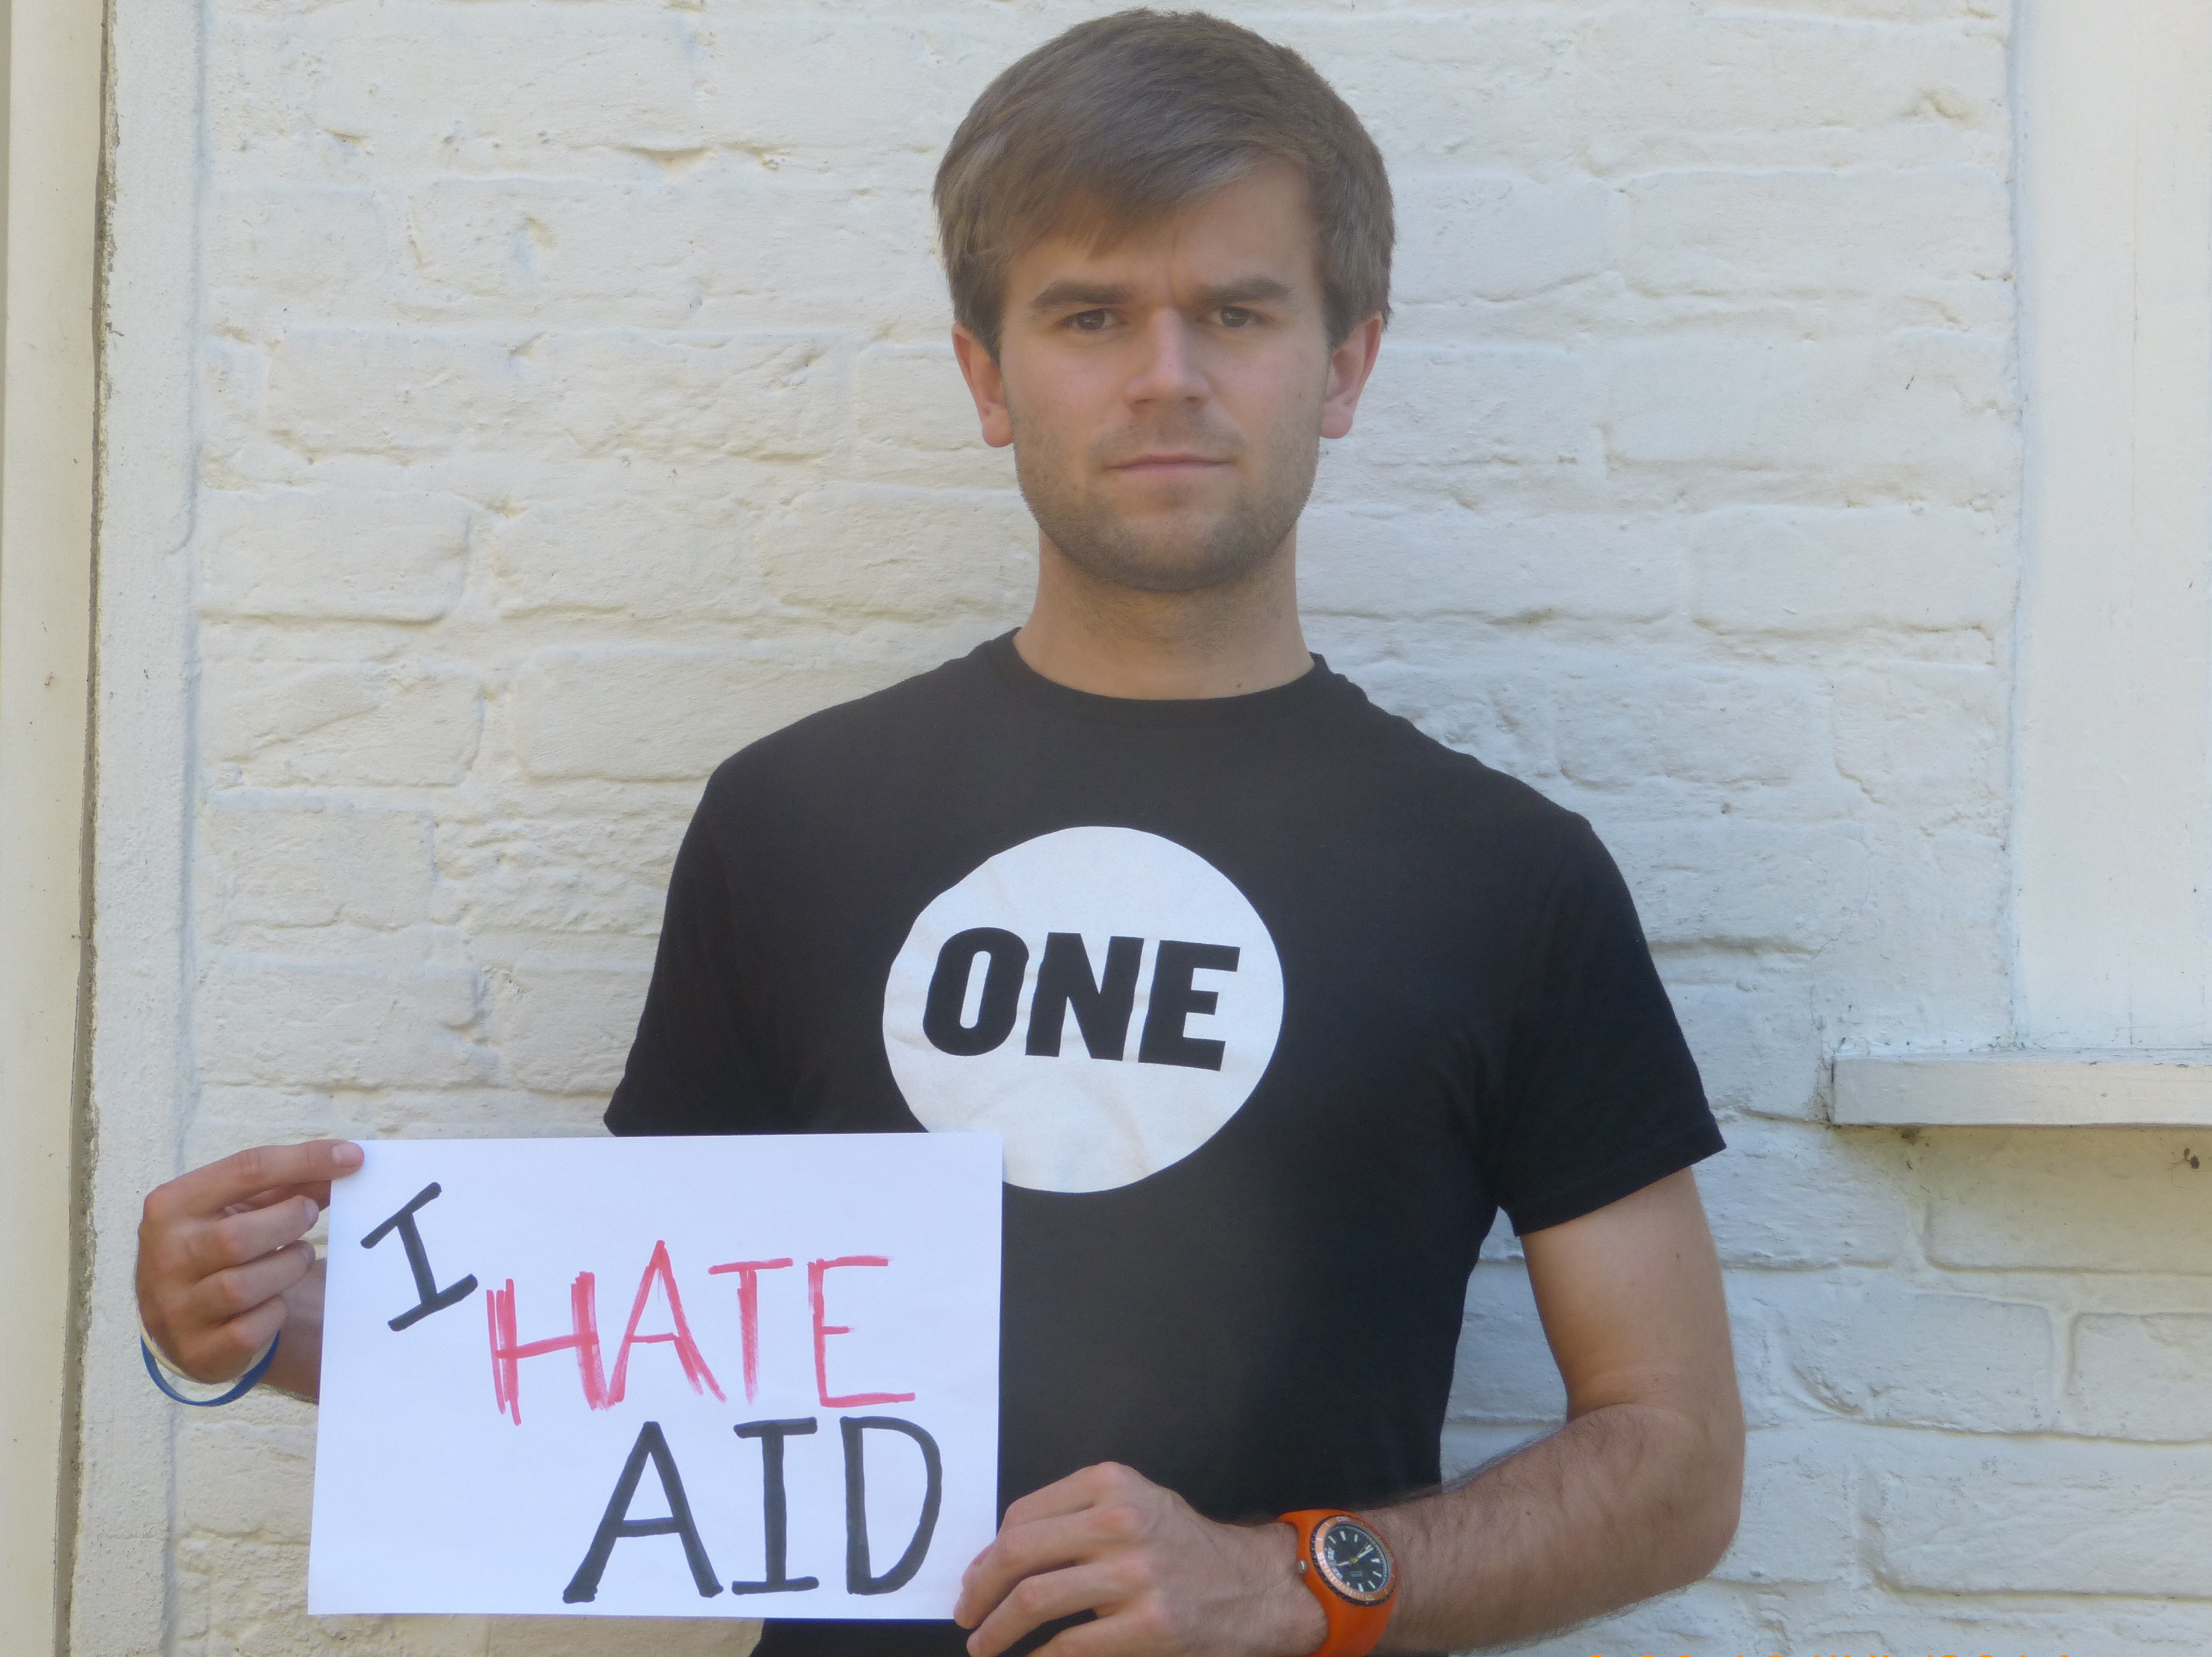 Why I hate overseas aid